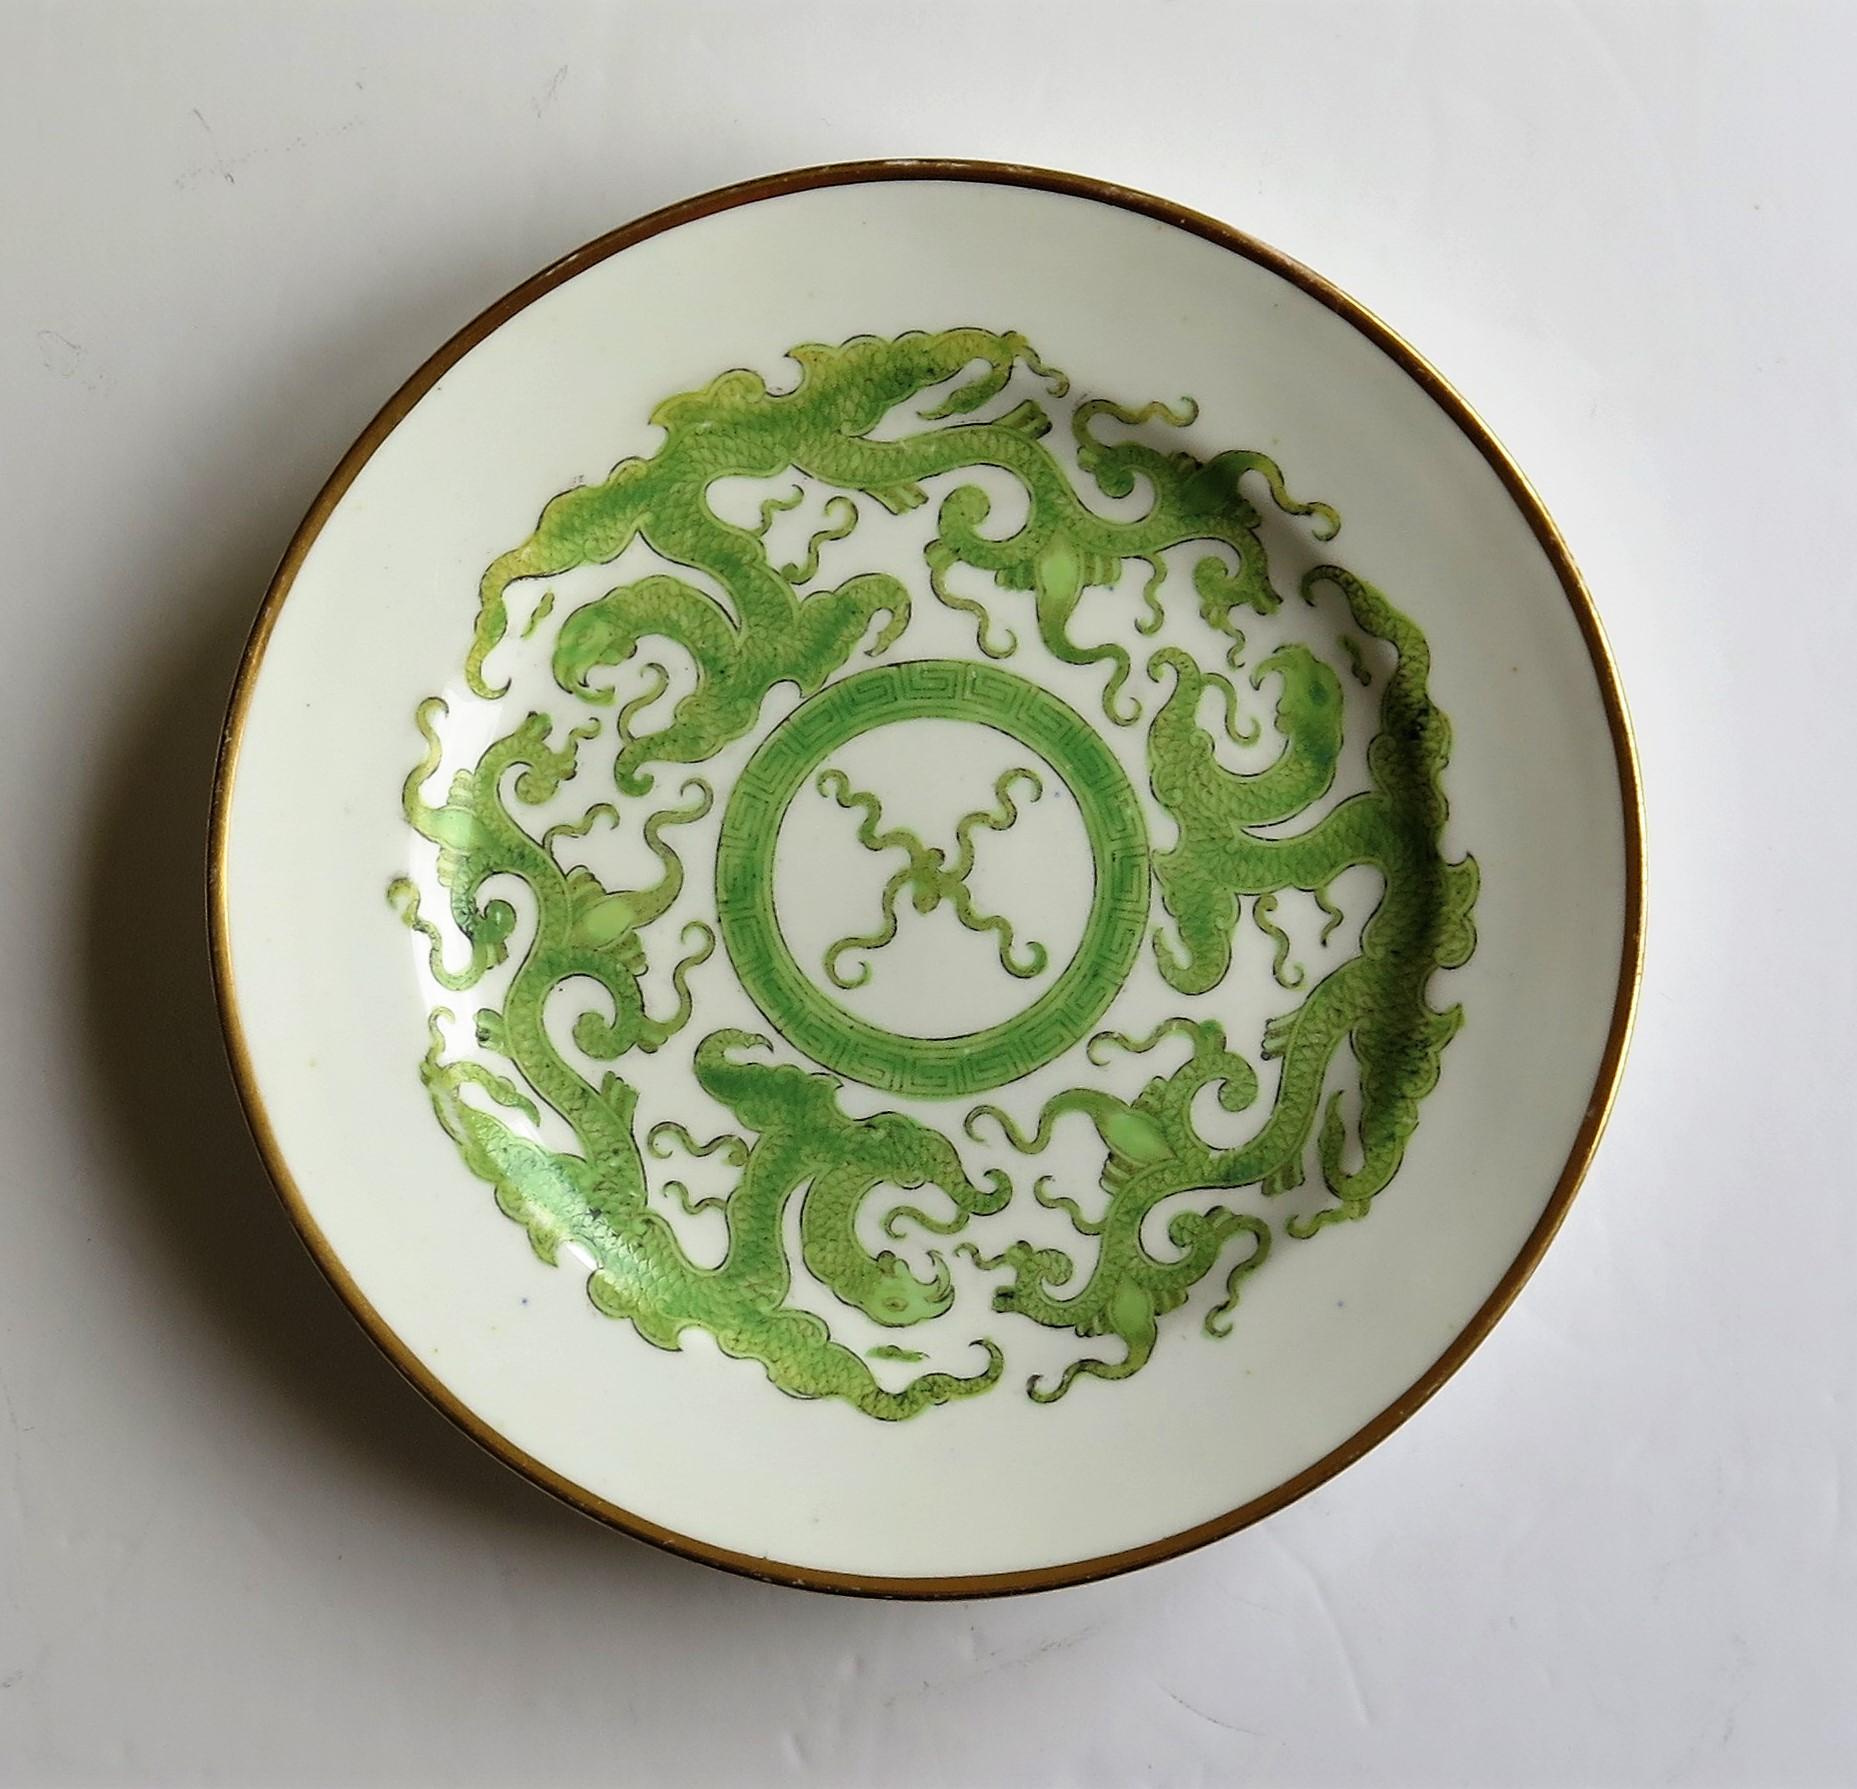 19th Century Georgian Miles Mason Porcelain Plate in Green Chinese Dragon Pattern, circa 1808